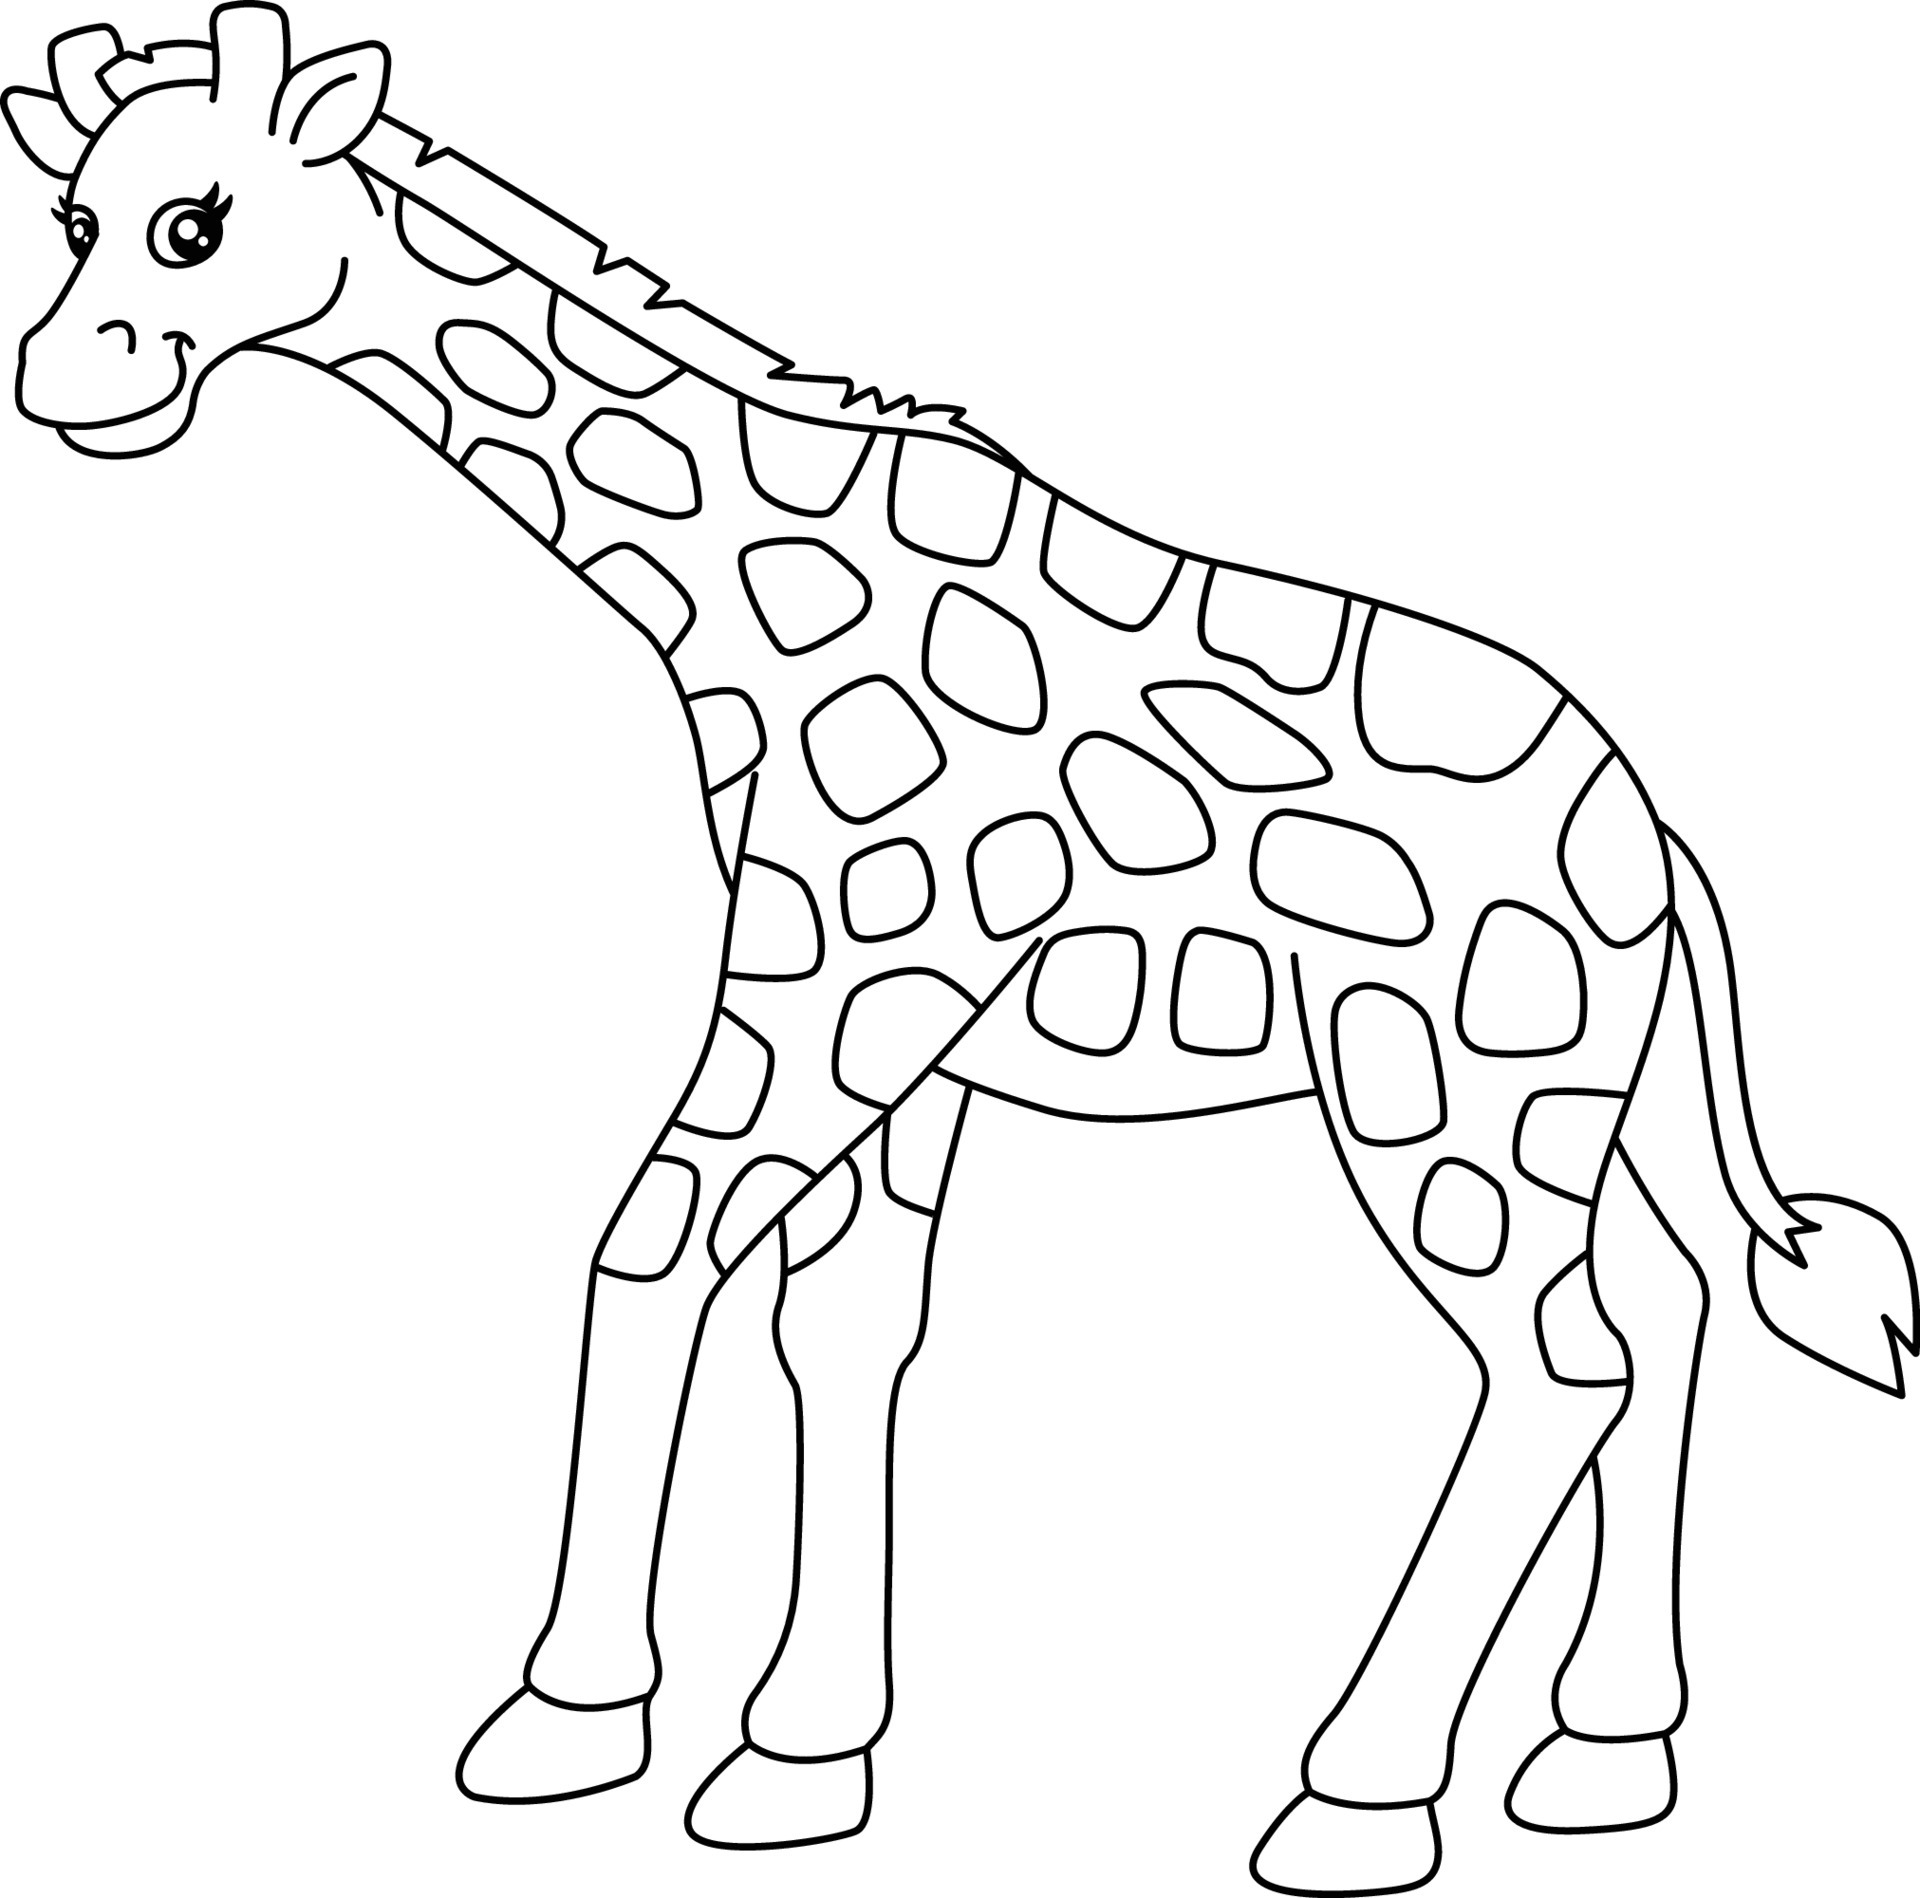 Great preschool giraffe coloring book